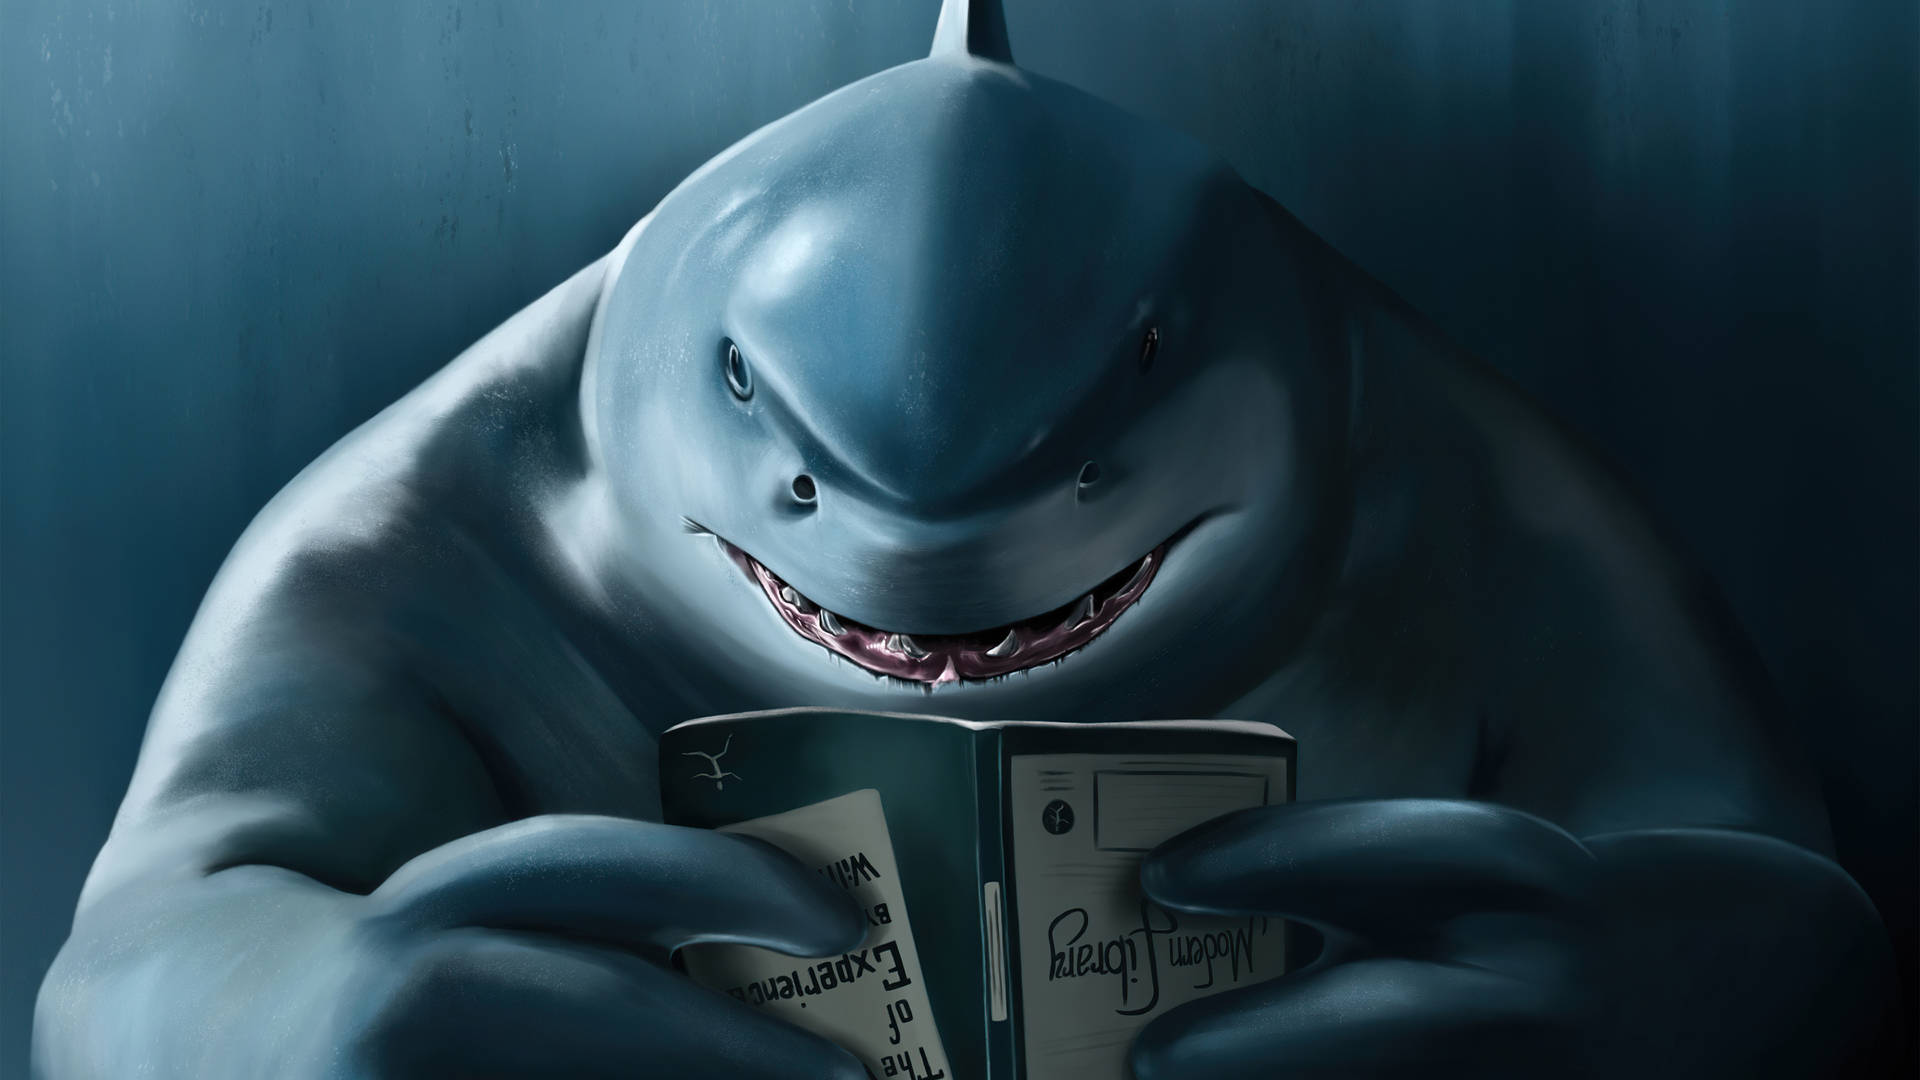 Free King Shark Wallpaper Downloads, [100+] King Shark Wallpapers for FREE  